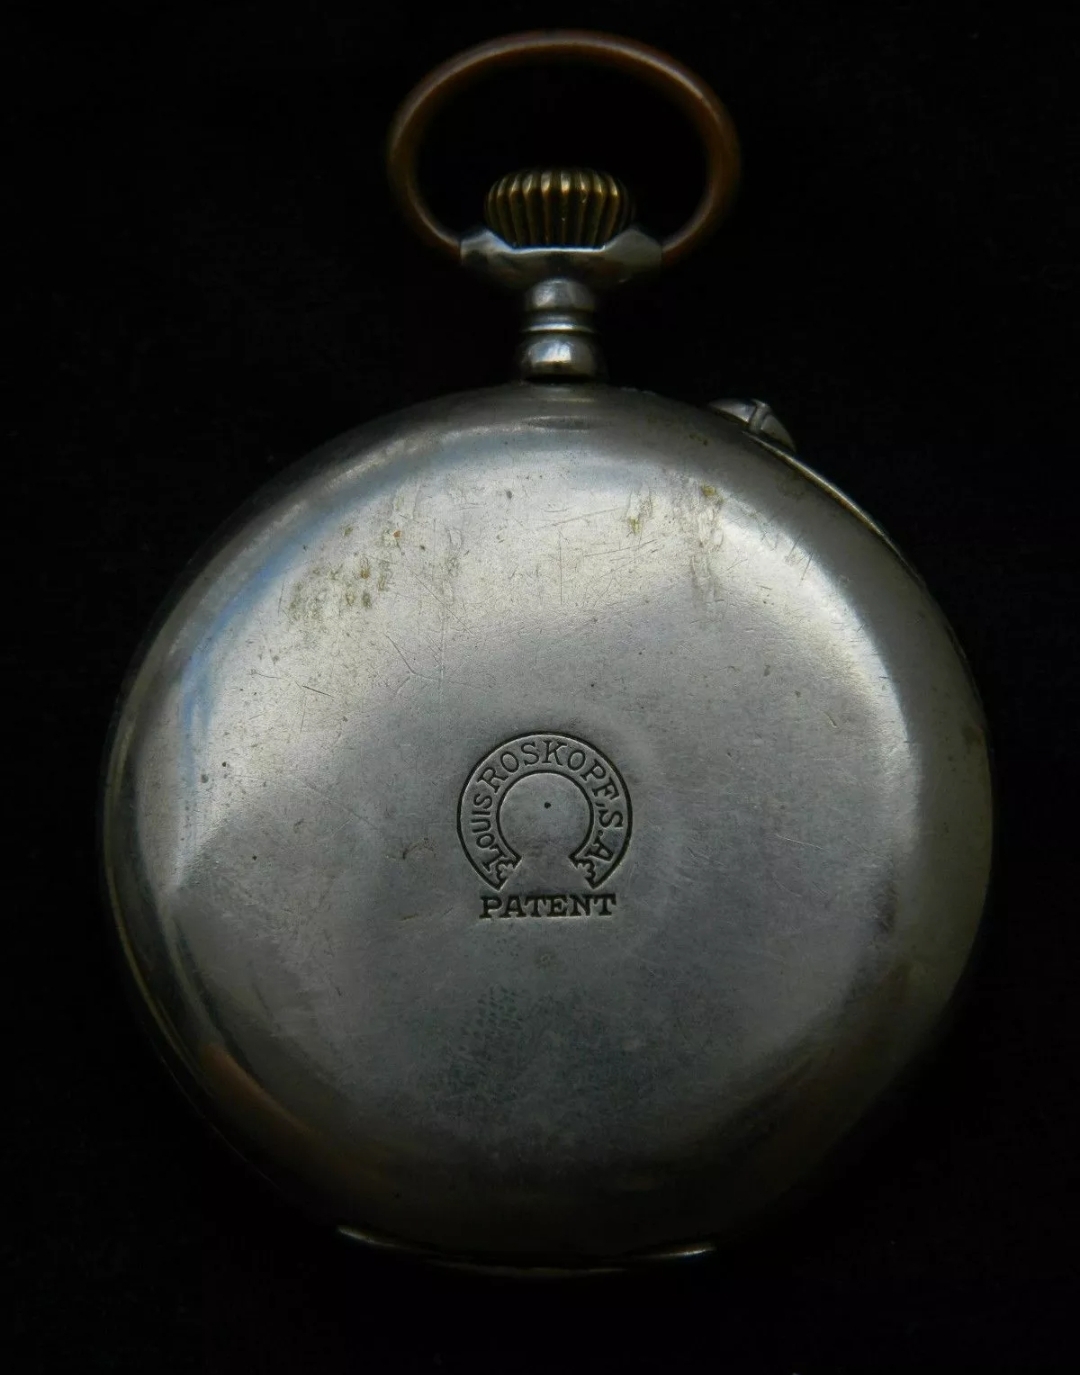 Excellent vintage Louis Roskopf SA patent pocket watch circa 1906